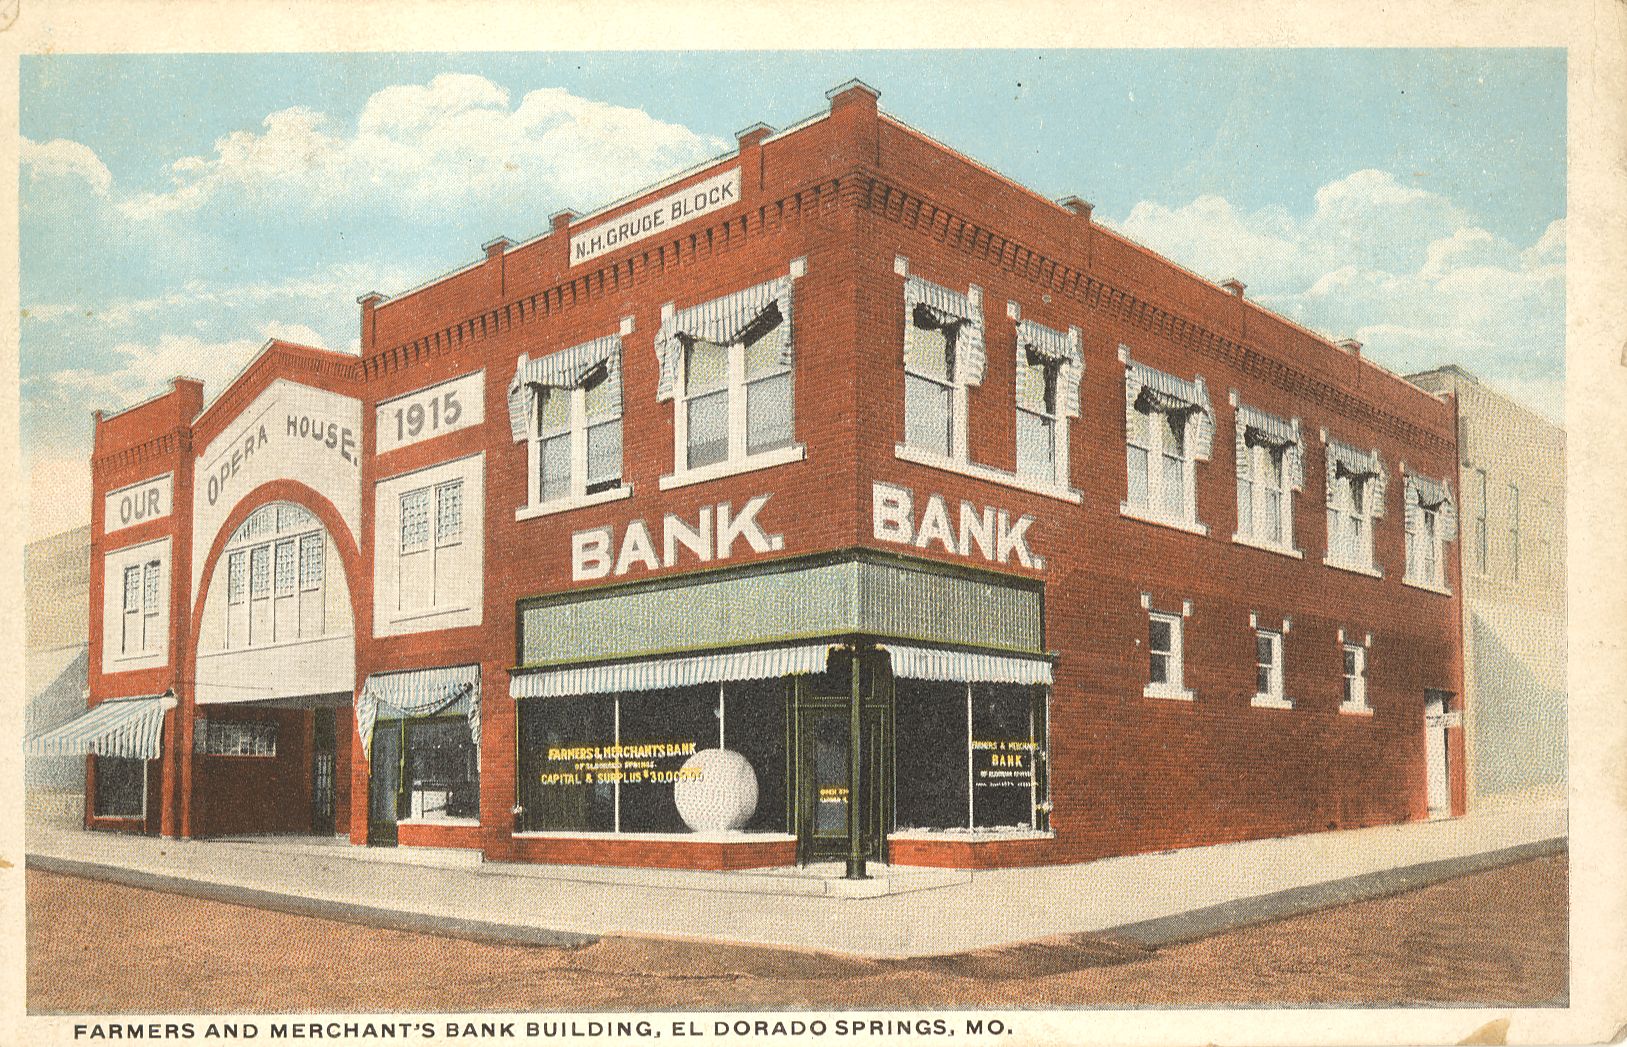 Farmer's and Merchant's Bank Building